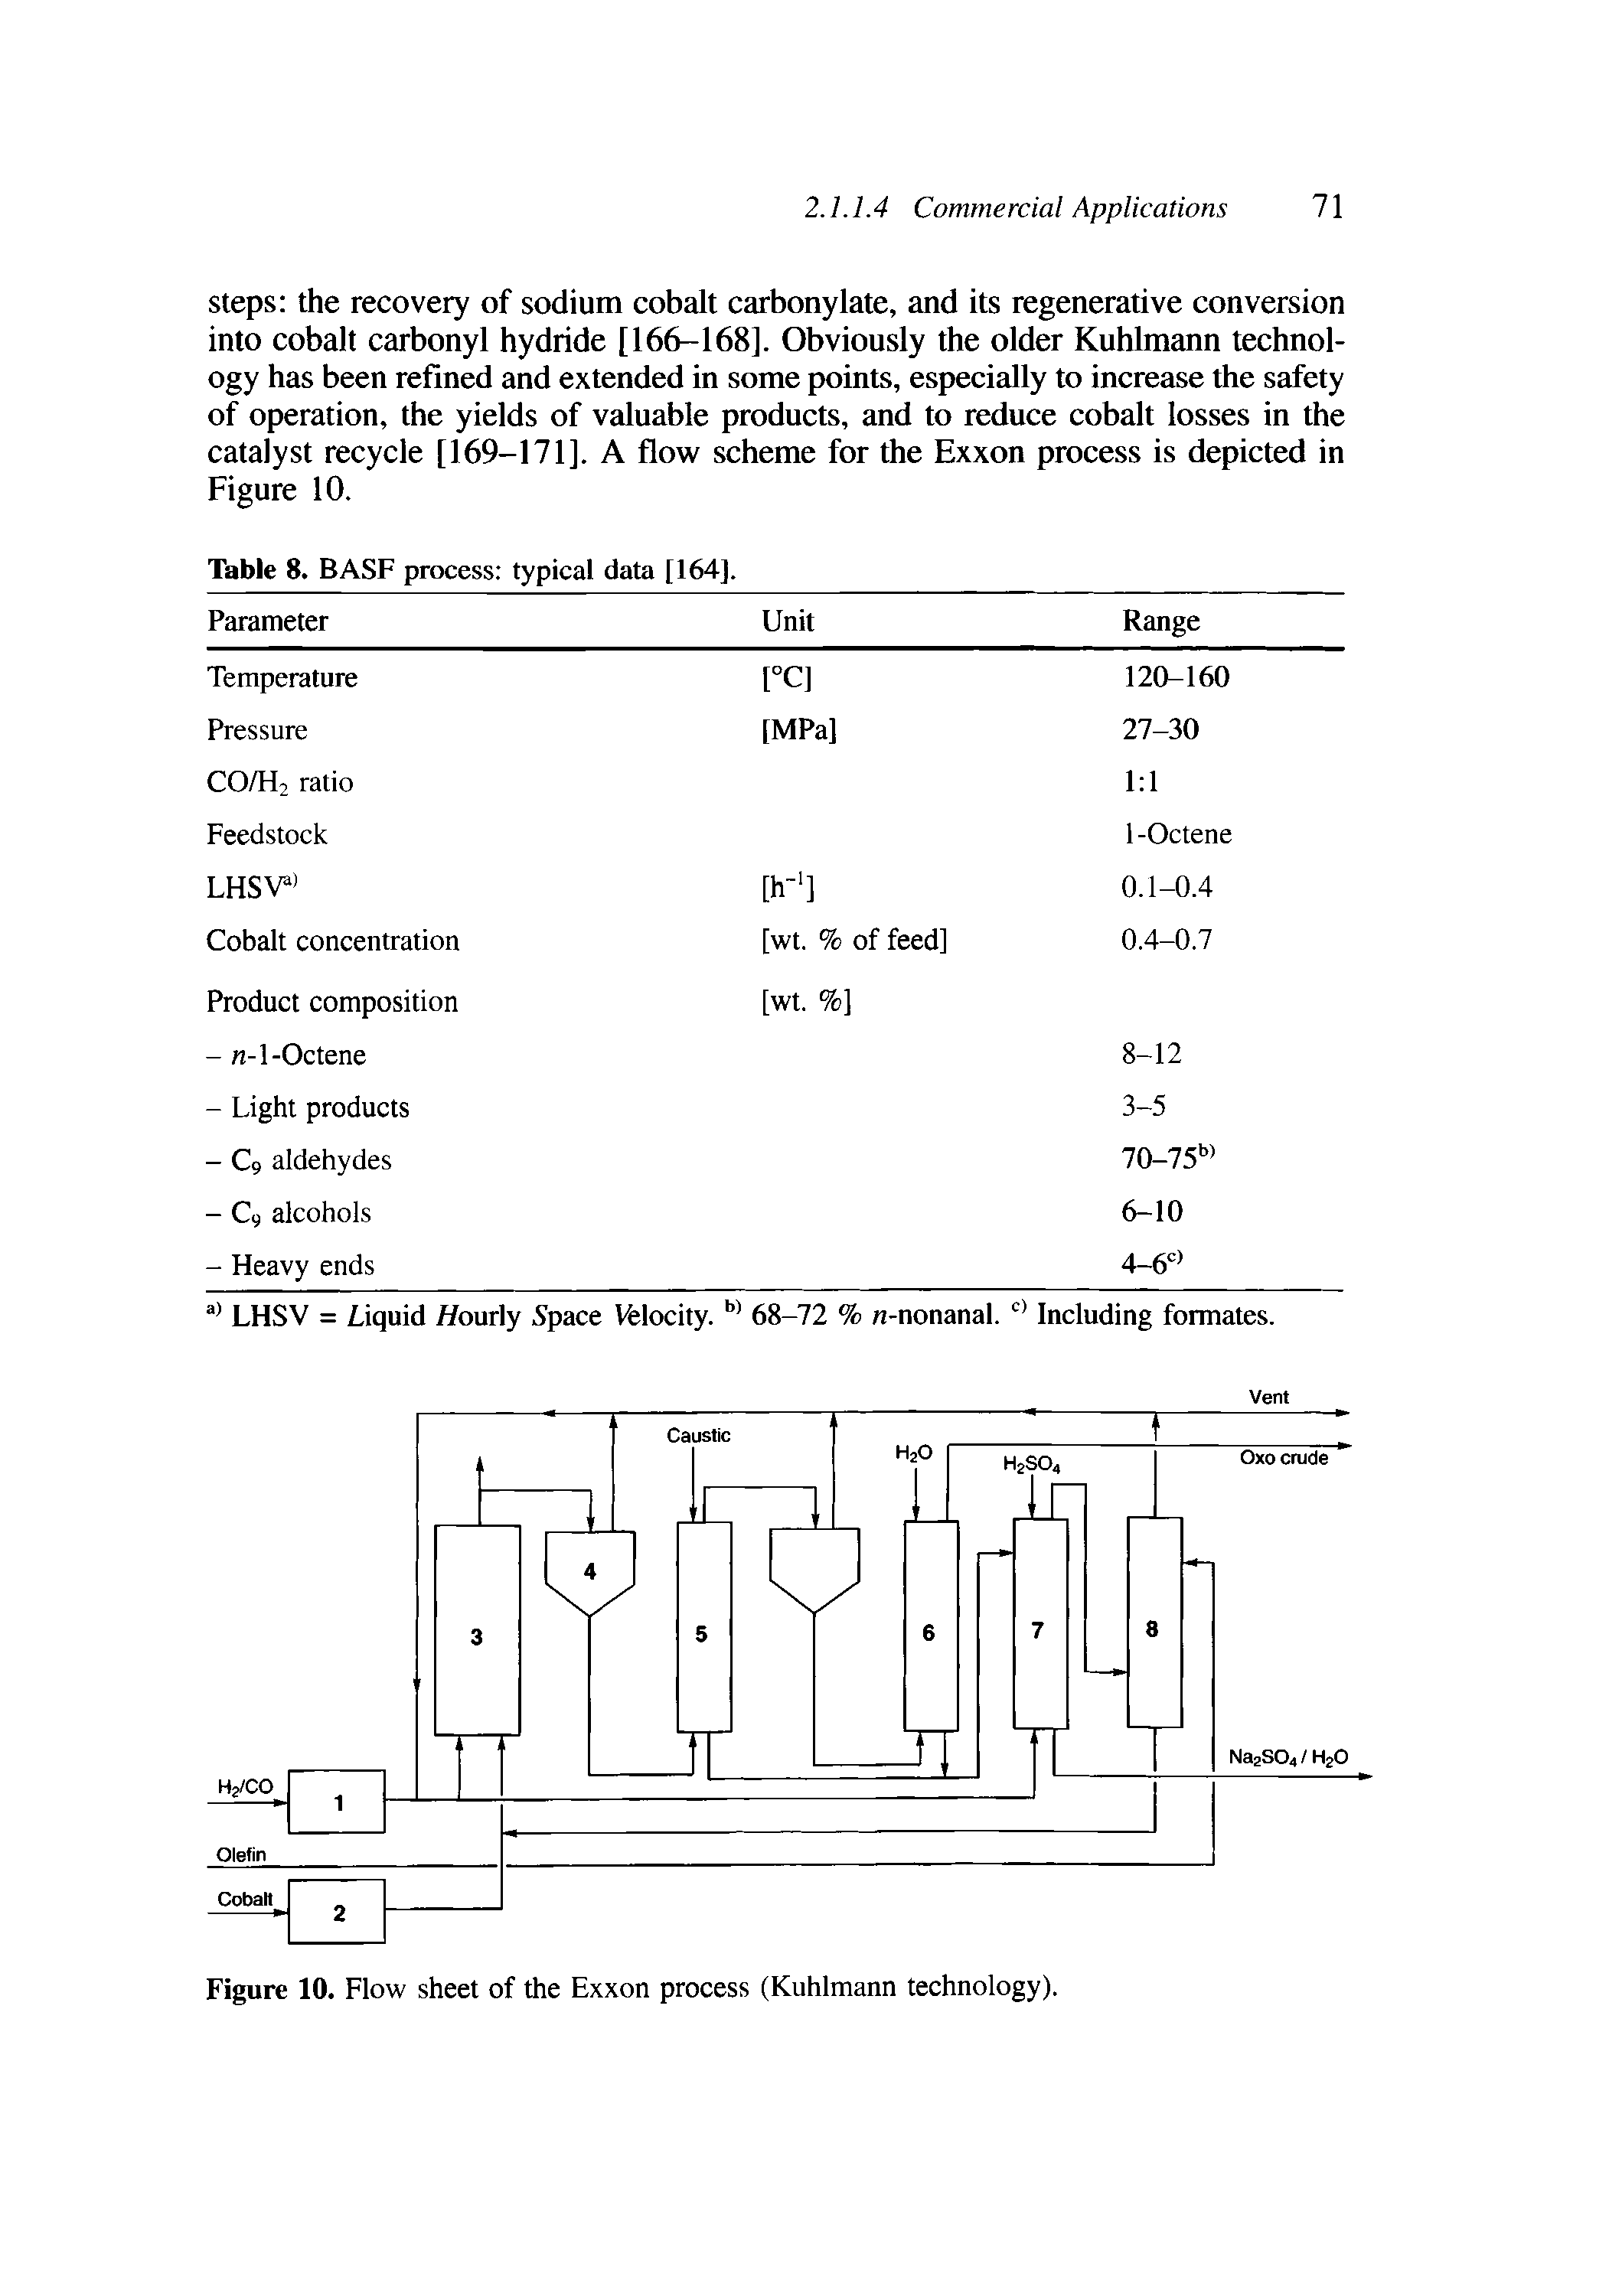 Figure 10. Flow sheet of the Exxon process (Kuhlmann technology).